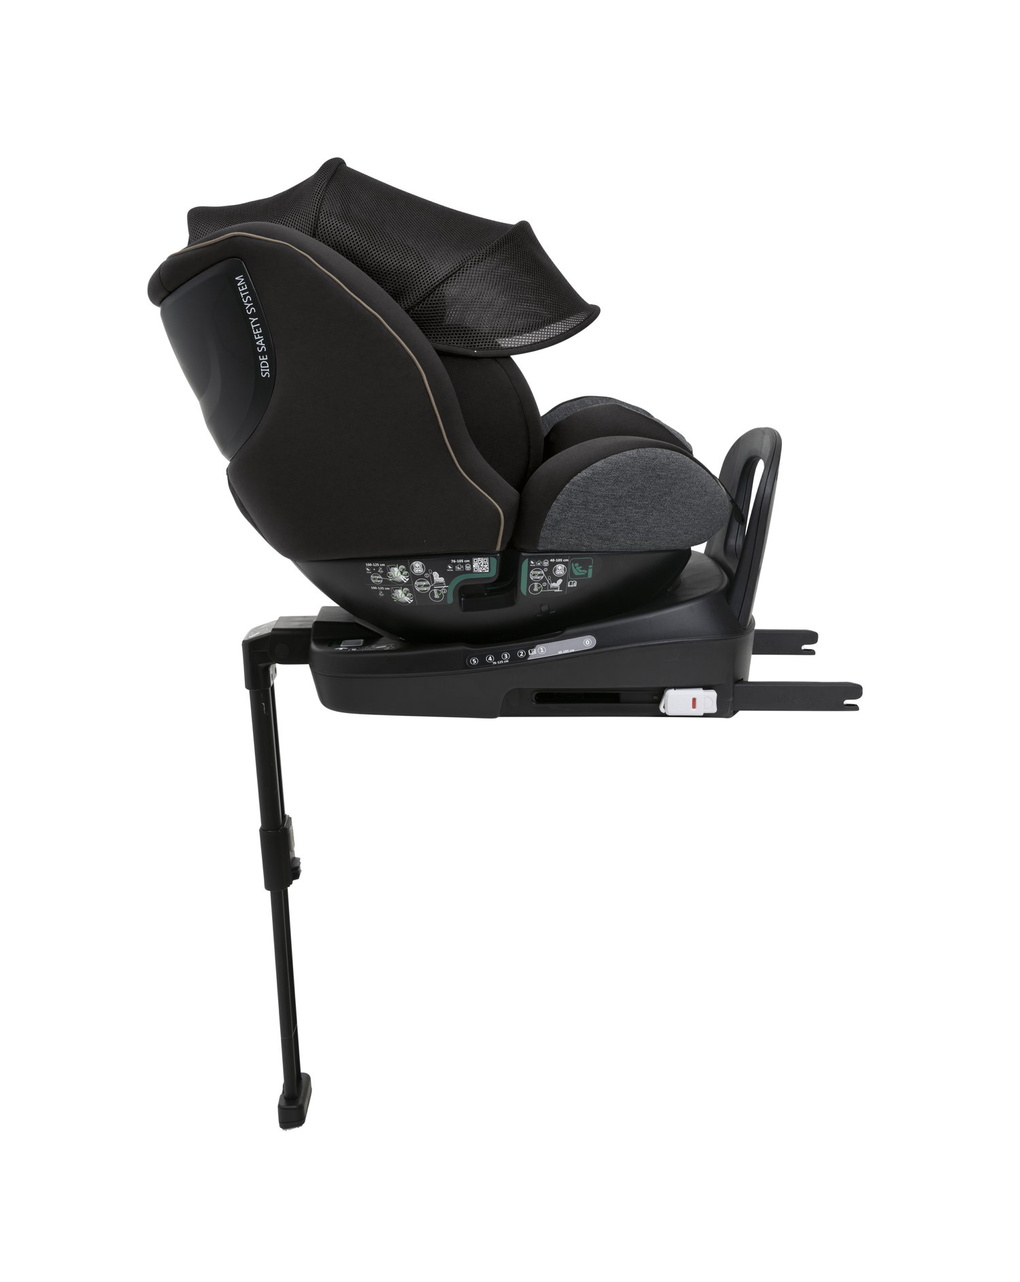 Seggiolino seat3fit air (40-125 cm) black melange - chicco - Chicco